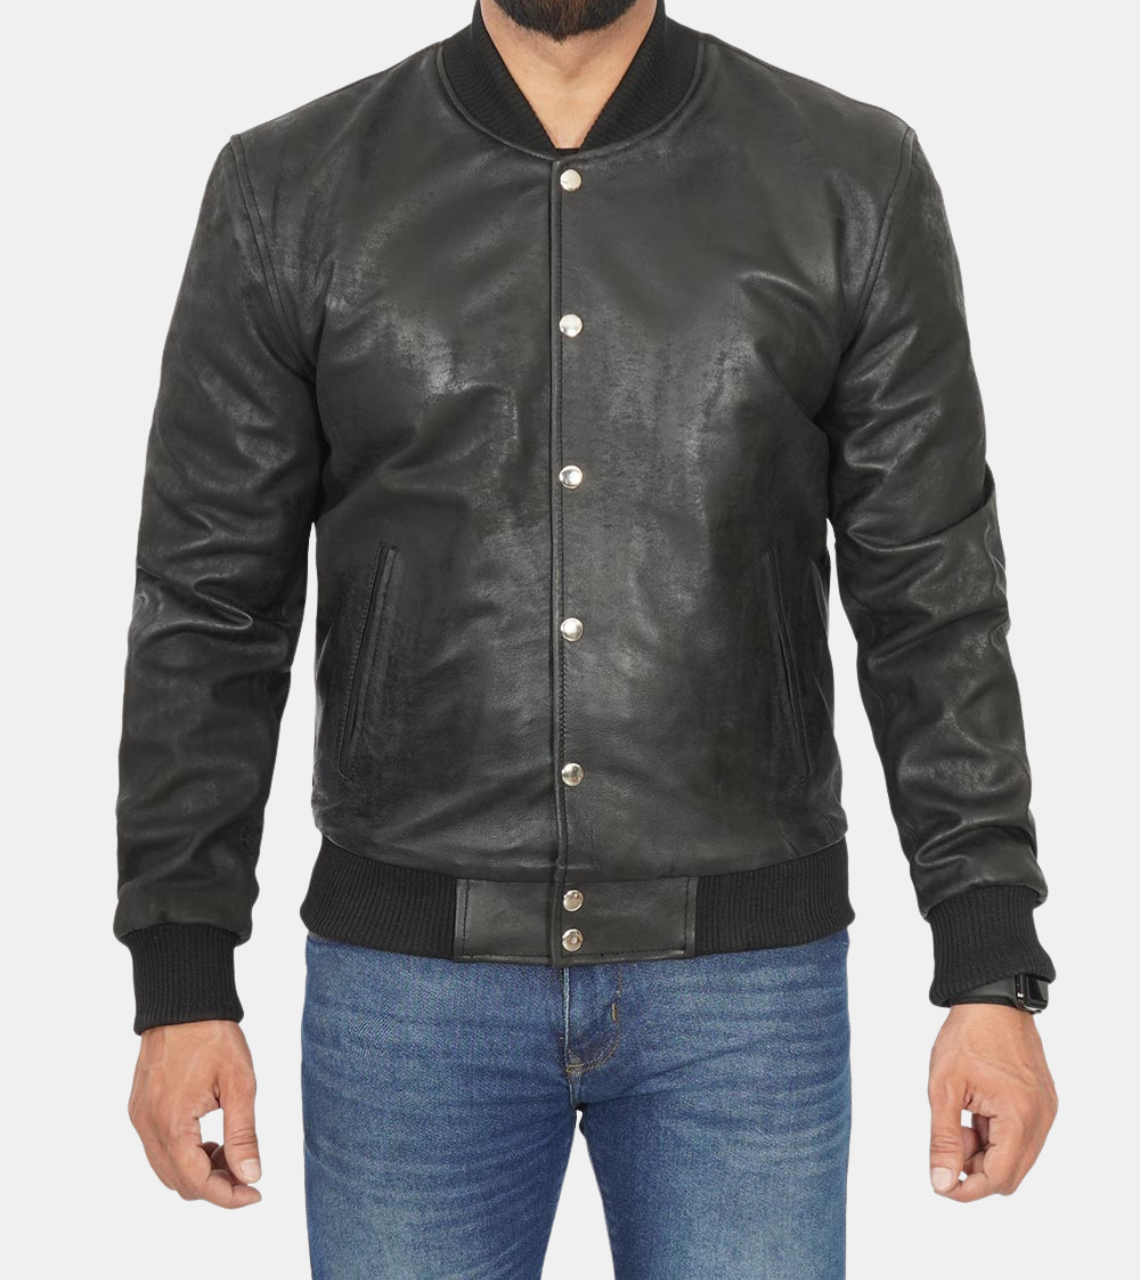 Jude Men's Black Bomber Leather Jacket Buttoned